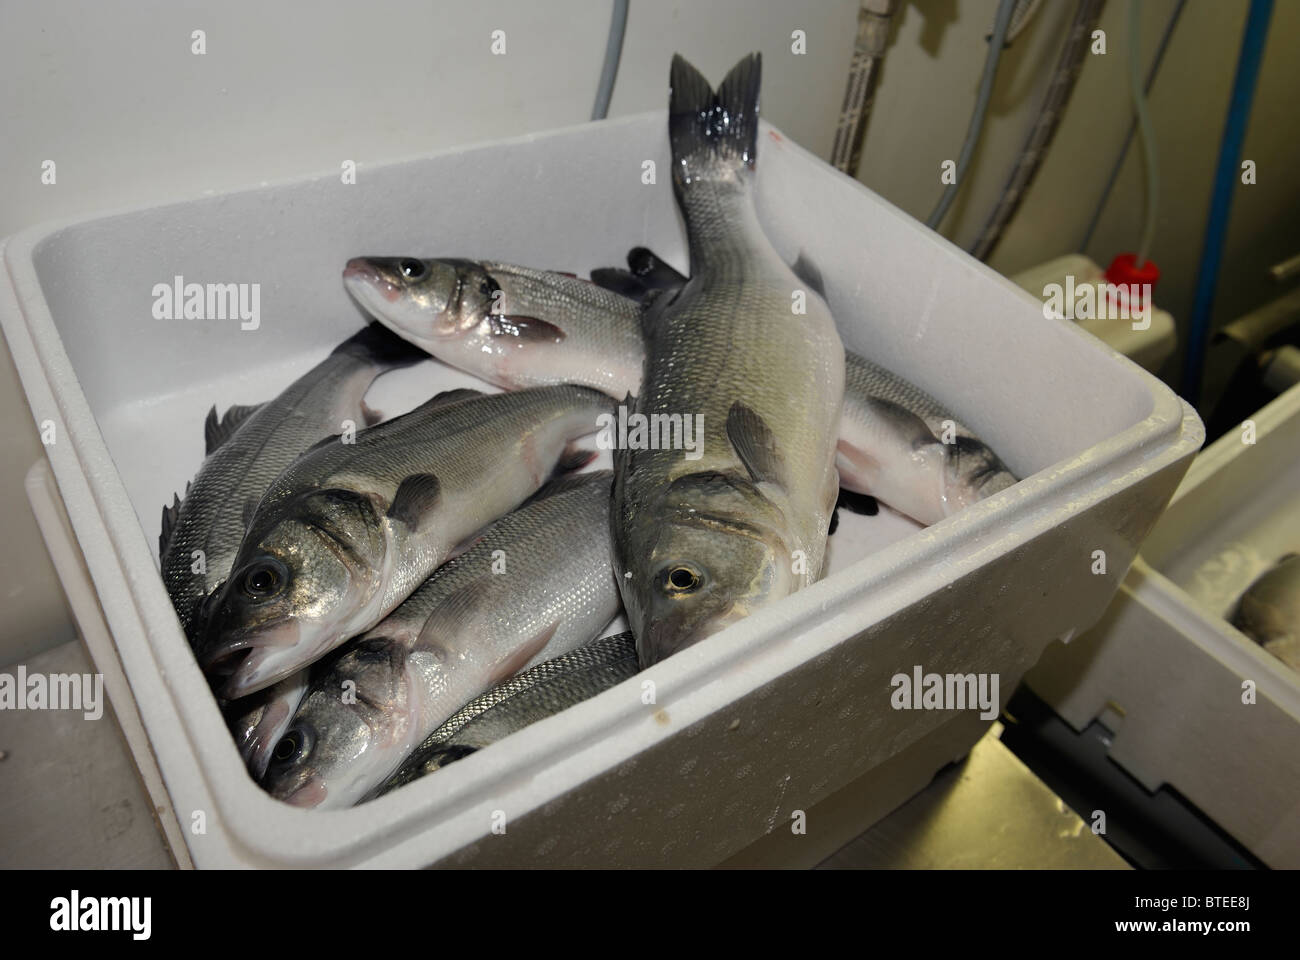 Polystyrene box full of farmed fish for sale Stock Photo